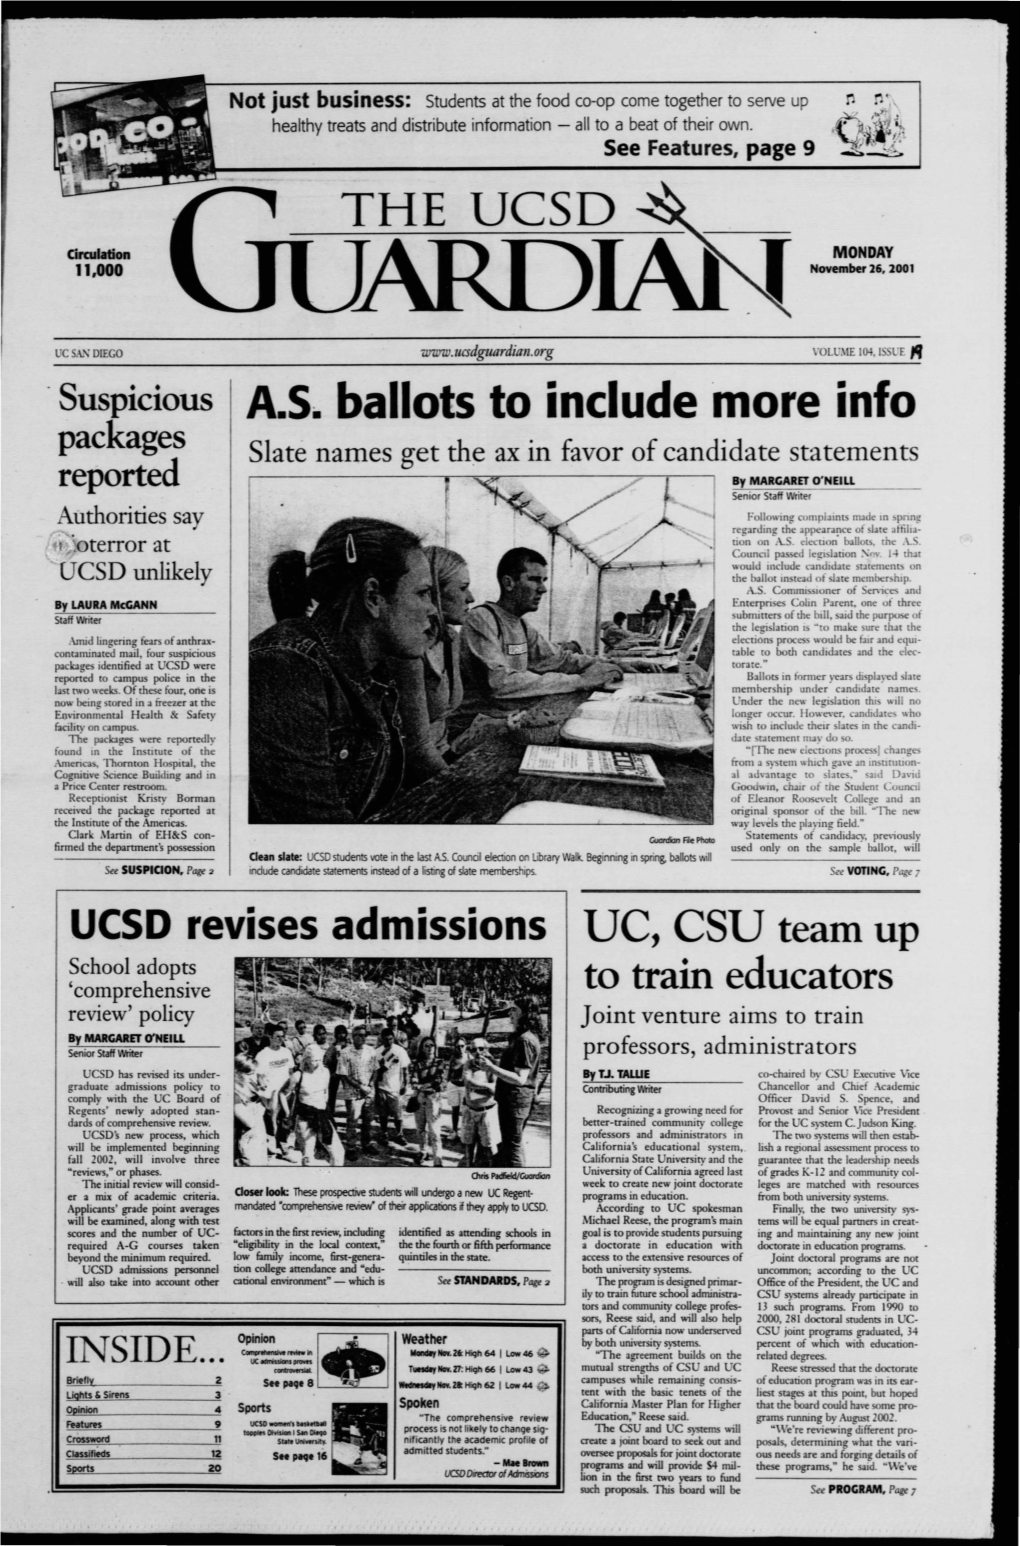 THE UCSD Circulation MONDAY 11,000 ~ARI) November 16, 2001